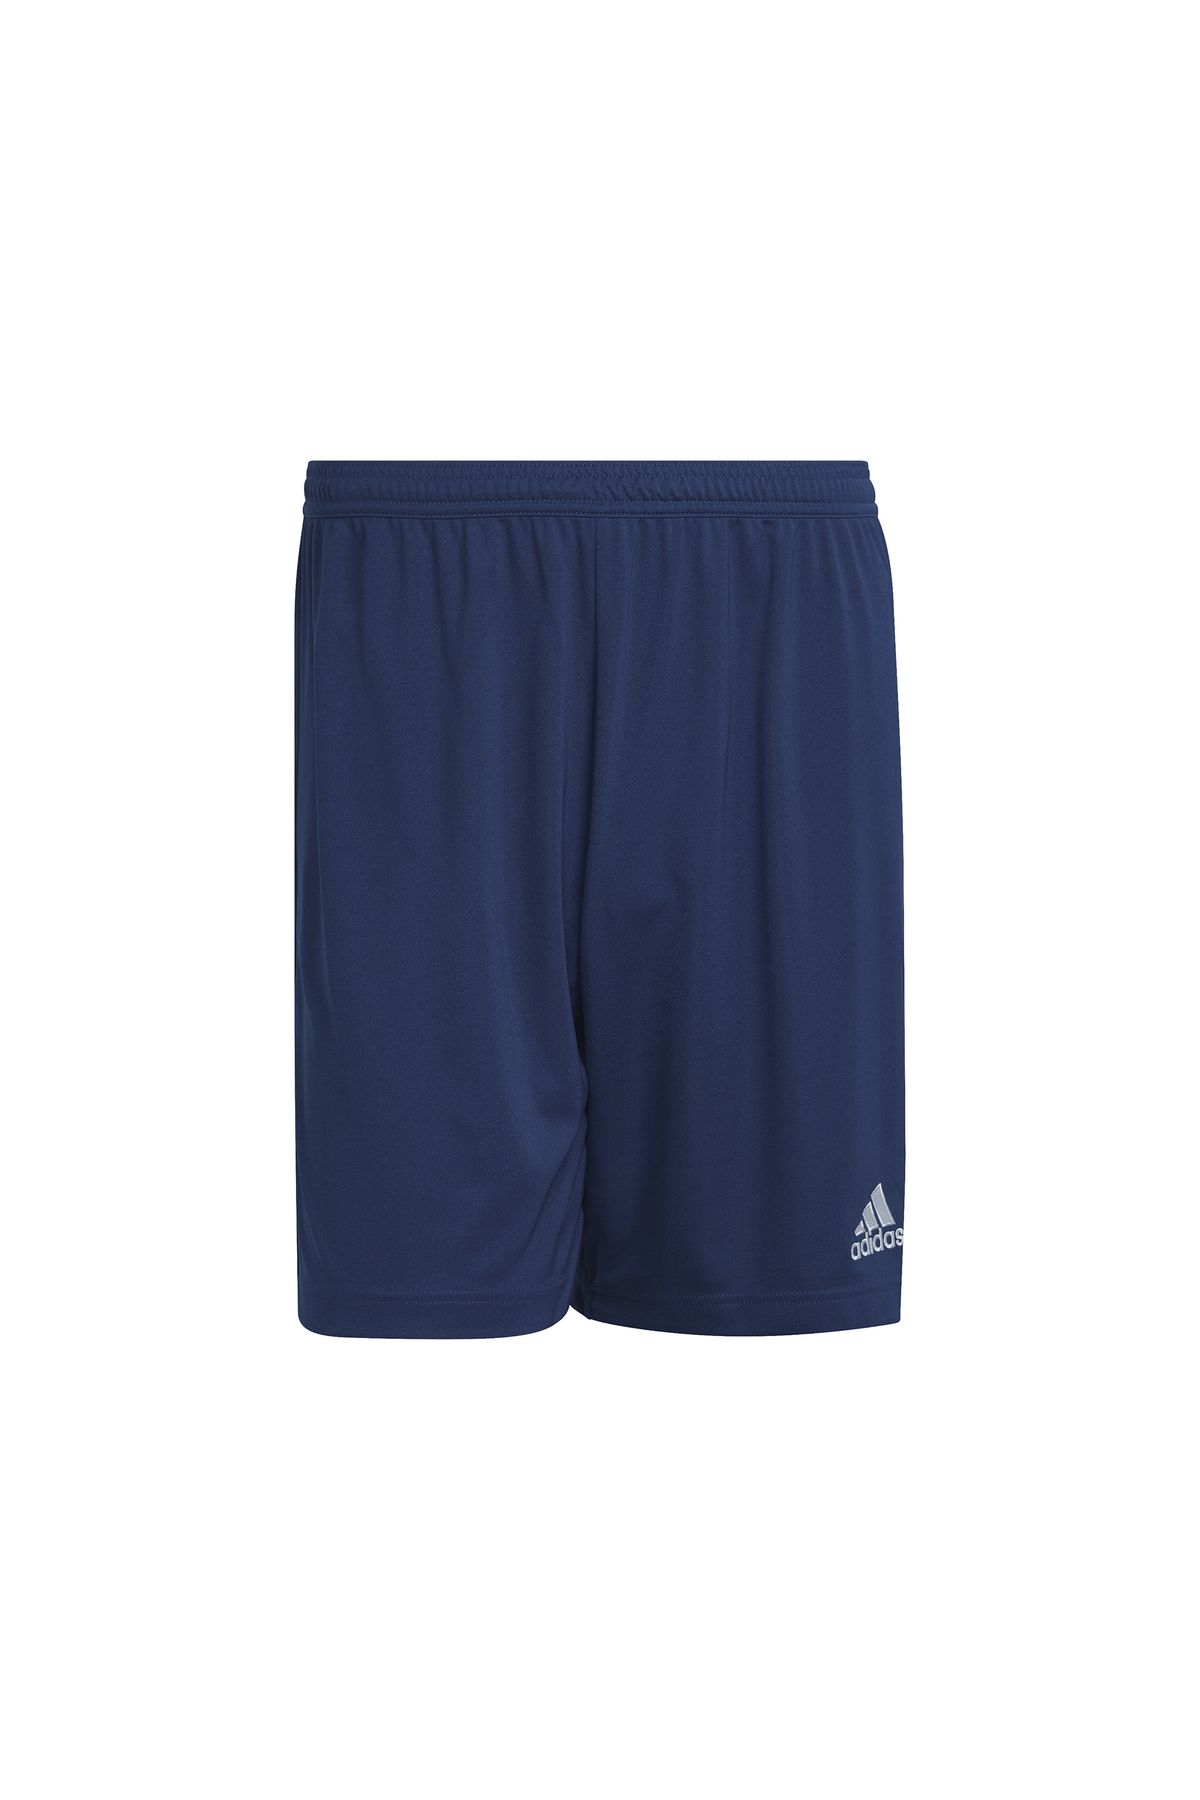 Blue - adidas Sho Shorts Trendyol H57506 Navy Men\'s Ent22